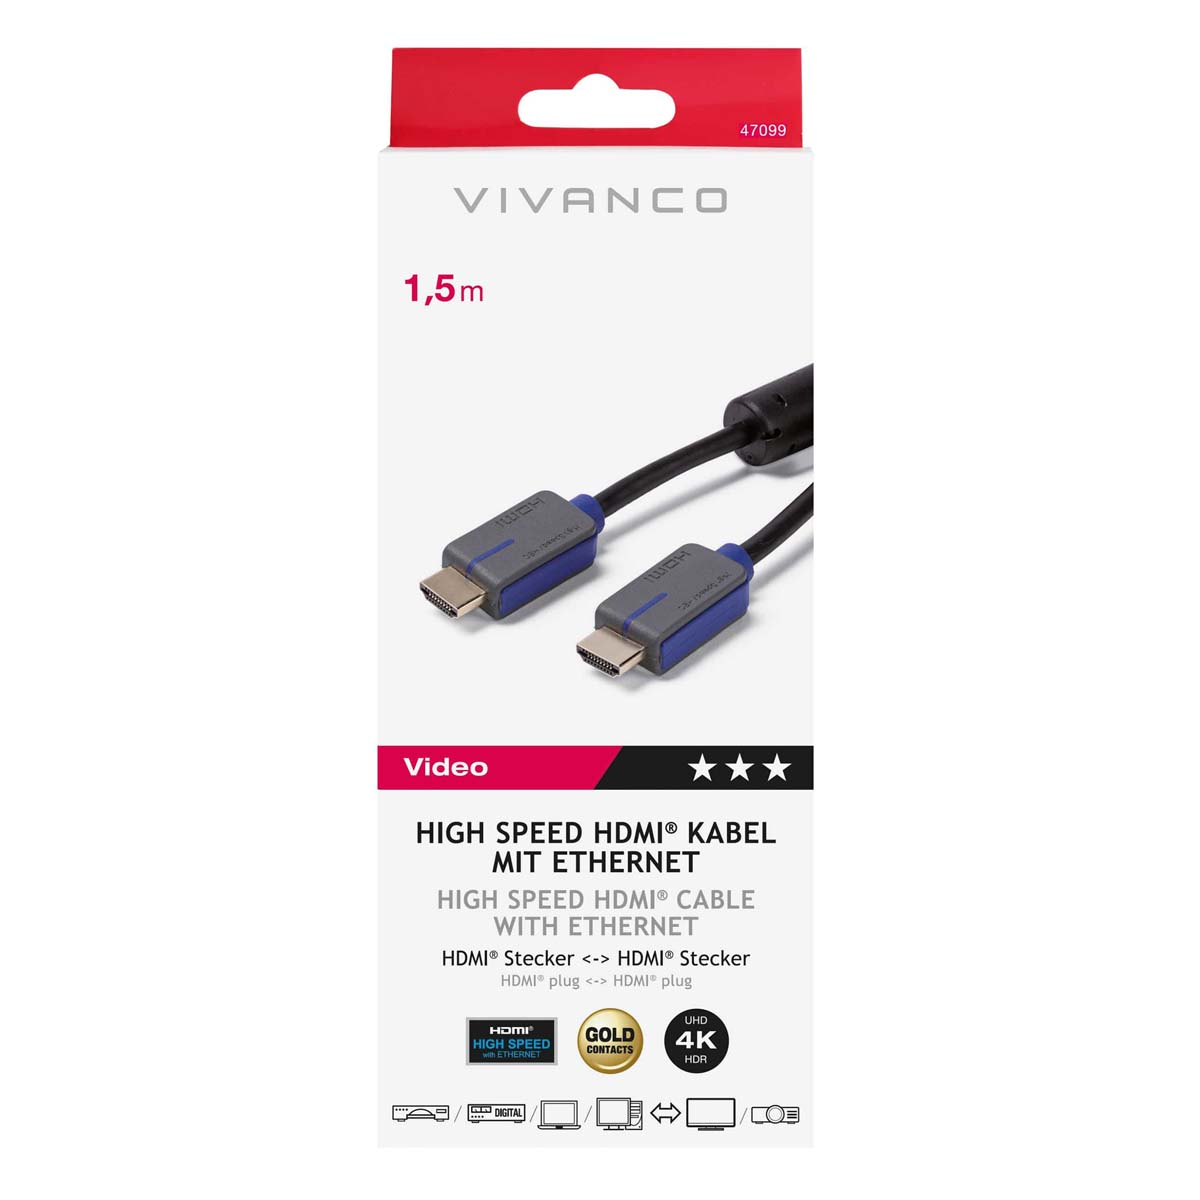 VIVANCO 47099 HDMI Kabel